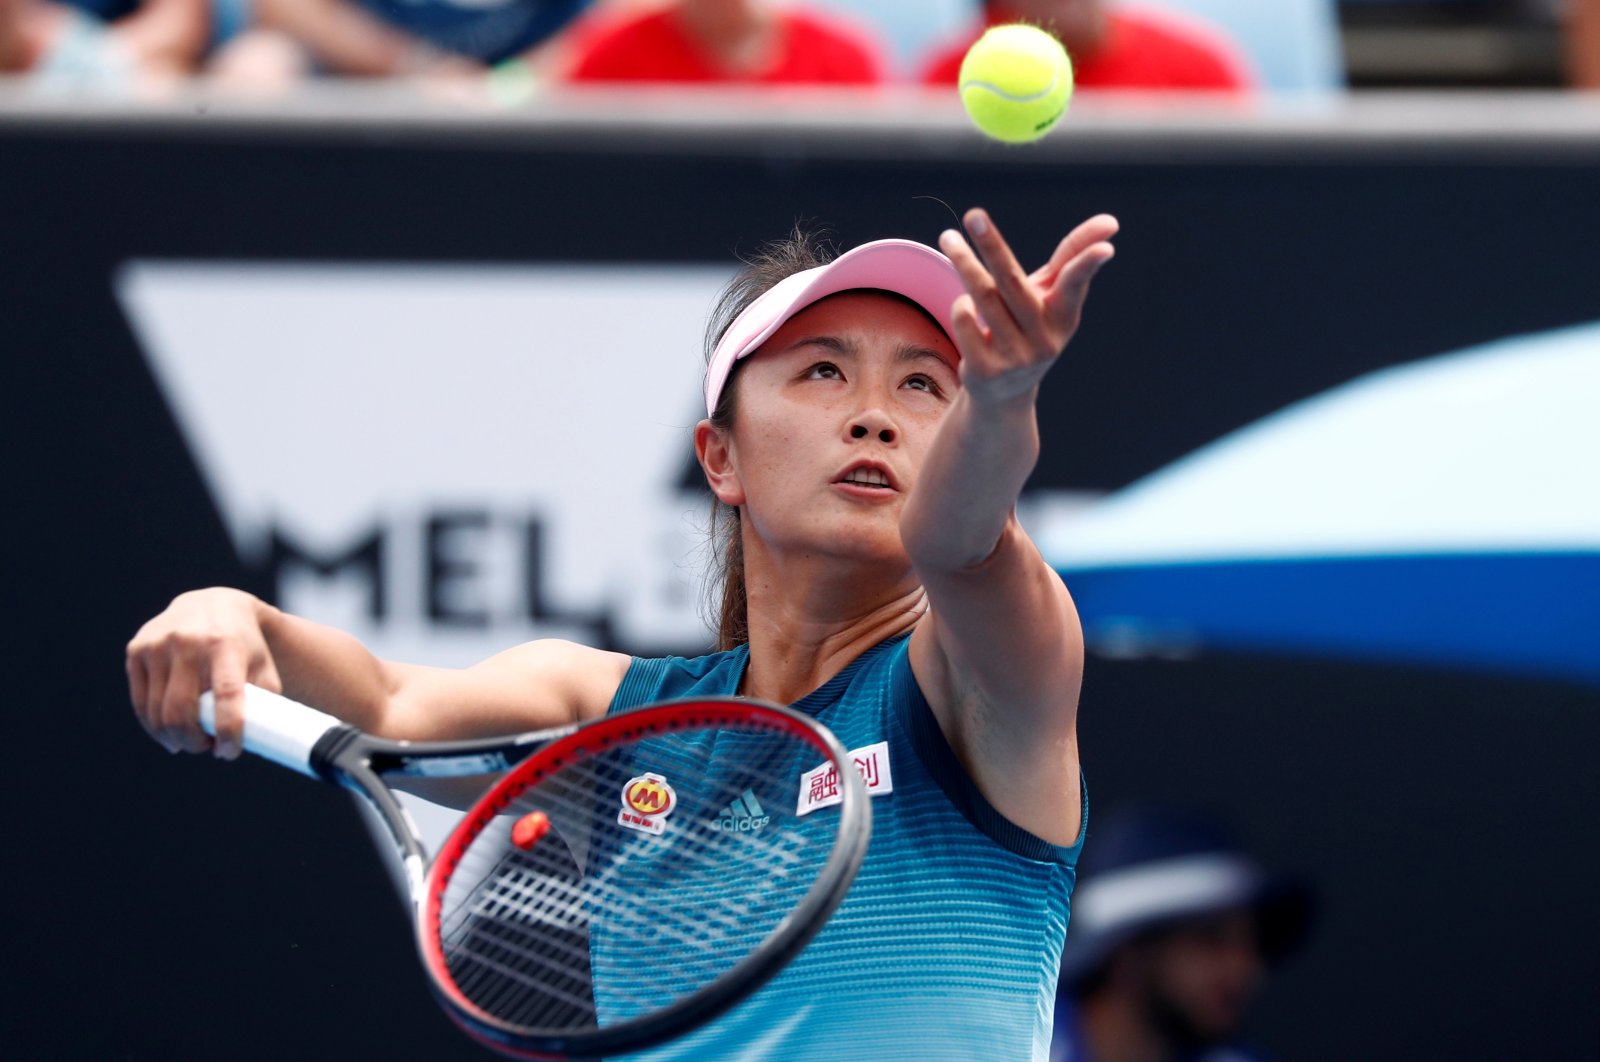 China’s Peng Shuai serves during a match at the Australian Open, Melbourne, Australia, Jan. 15, 2019. (Reuters Photo)